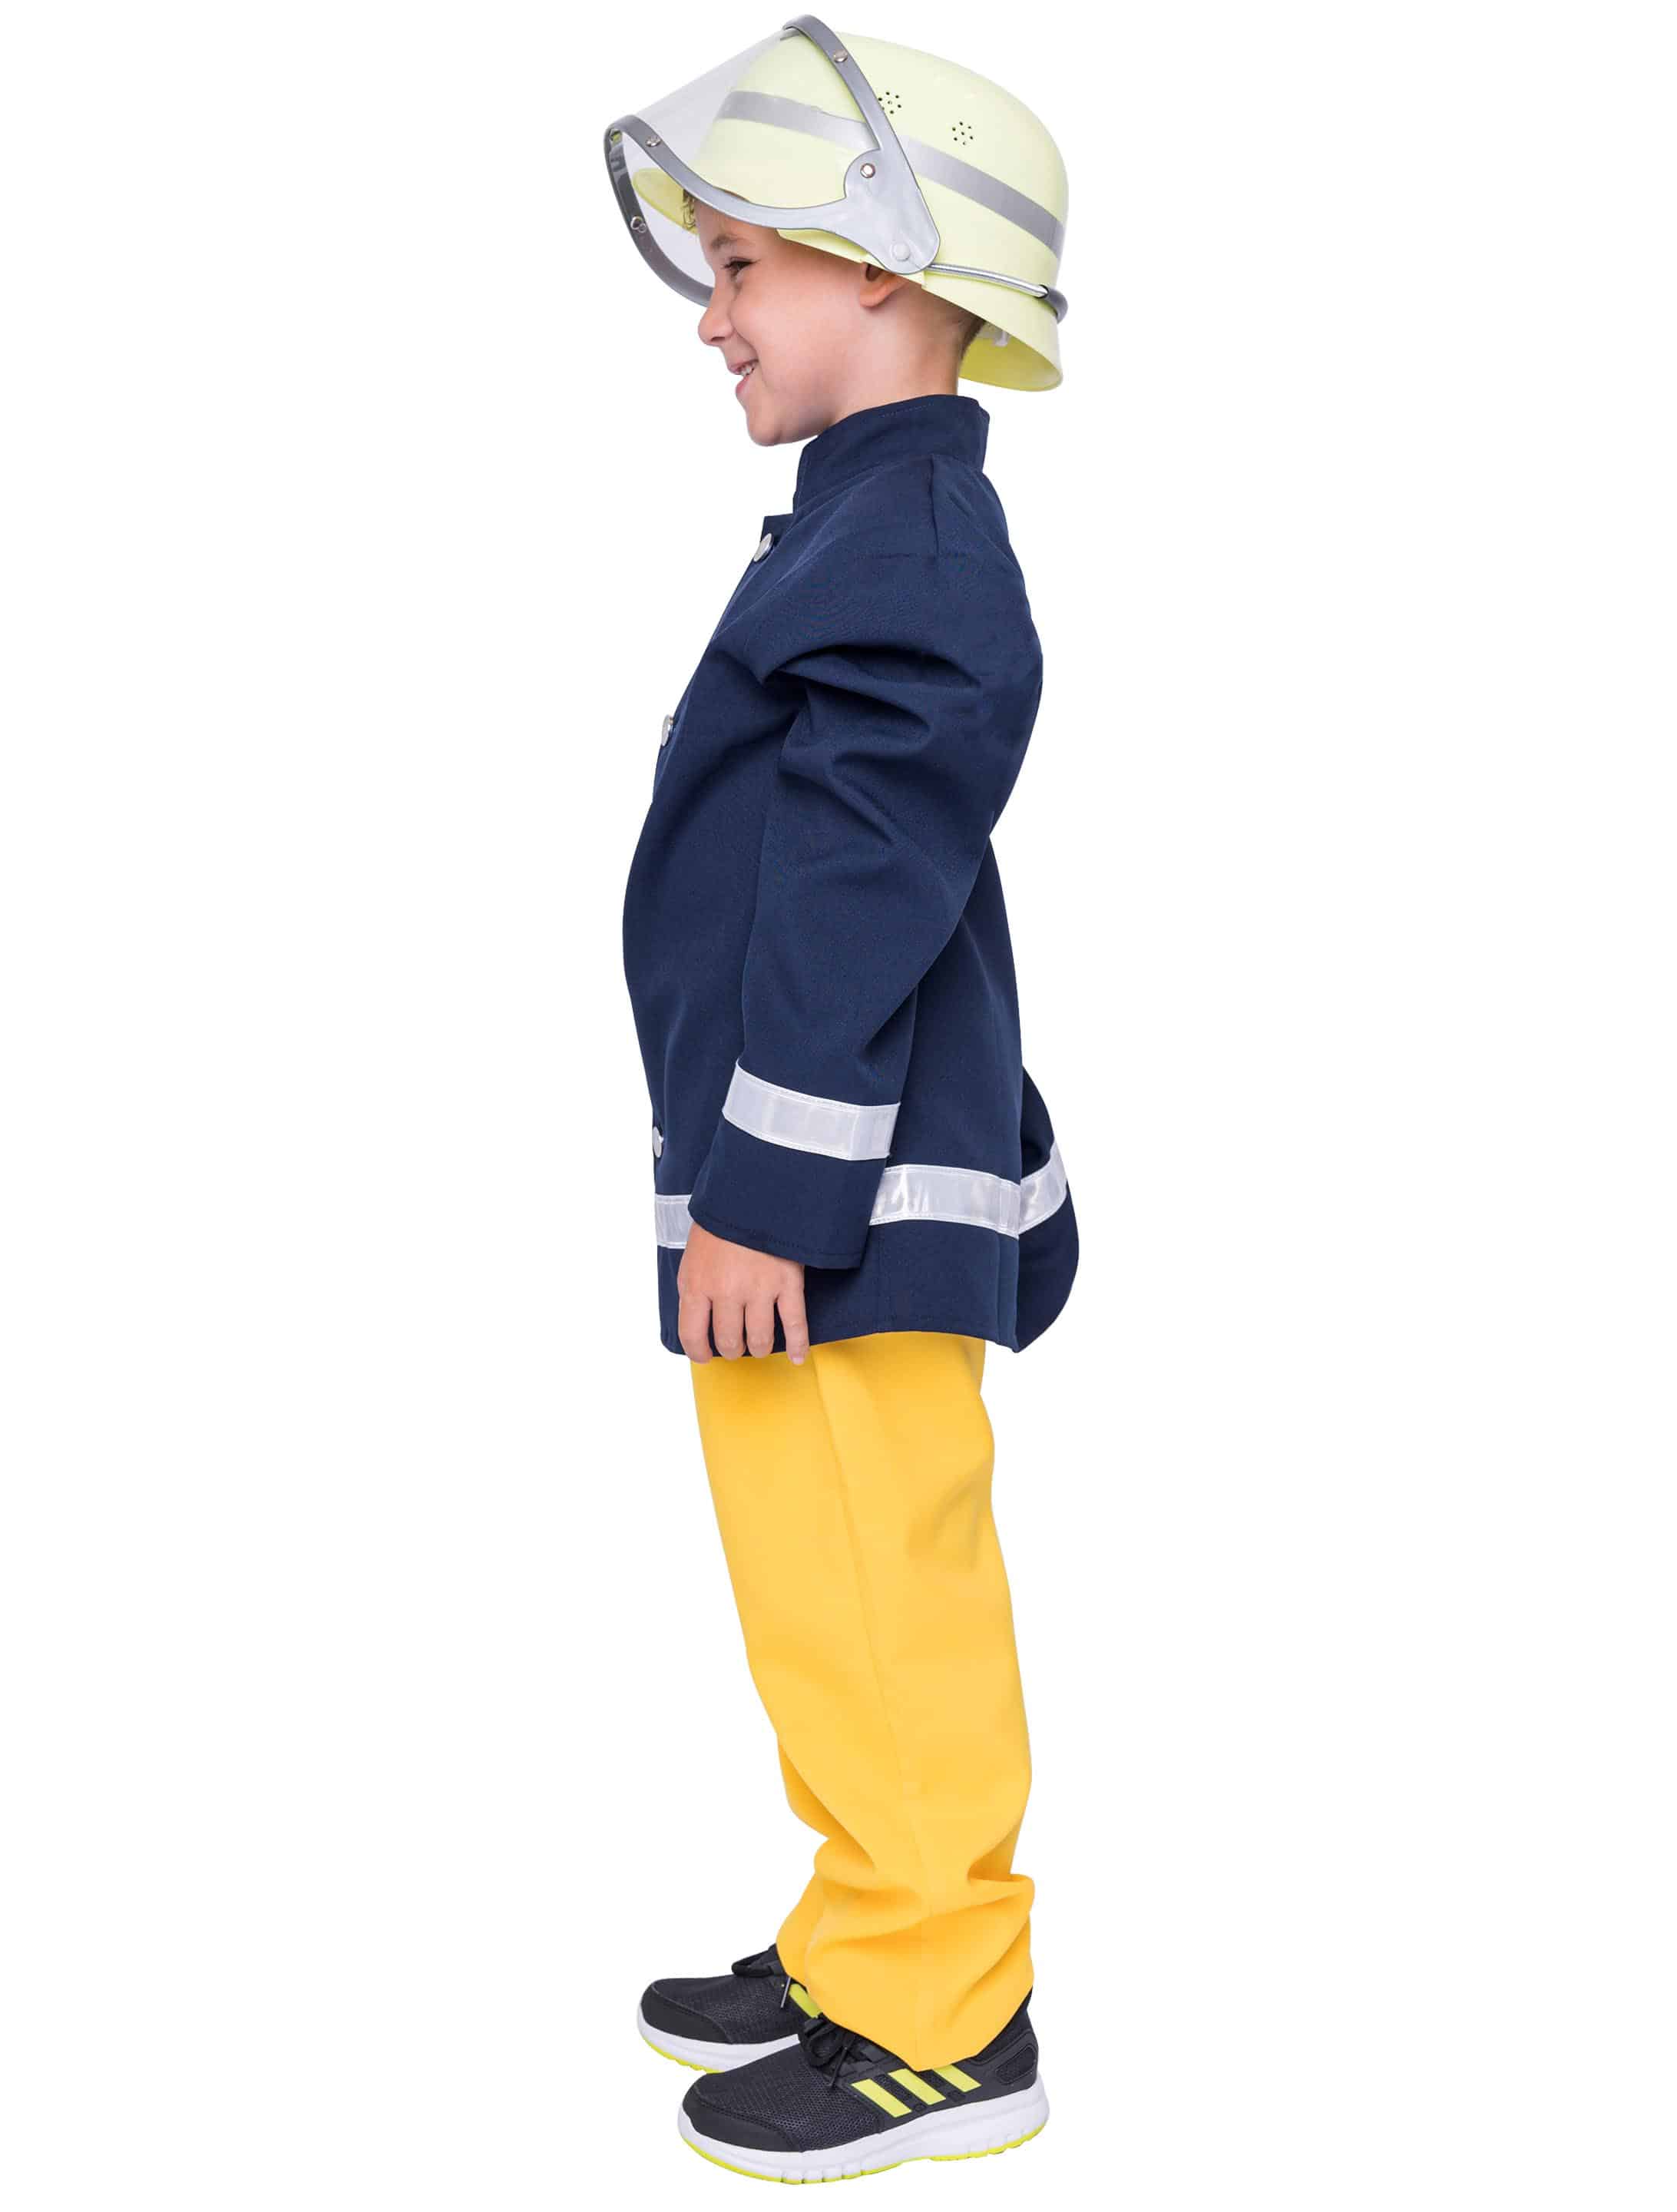 Feuerwehrmann Kinder 2-tlg. Unisex blau/gelb 116